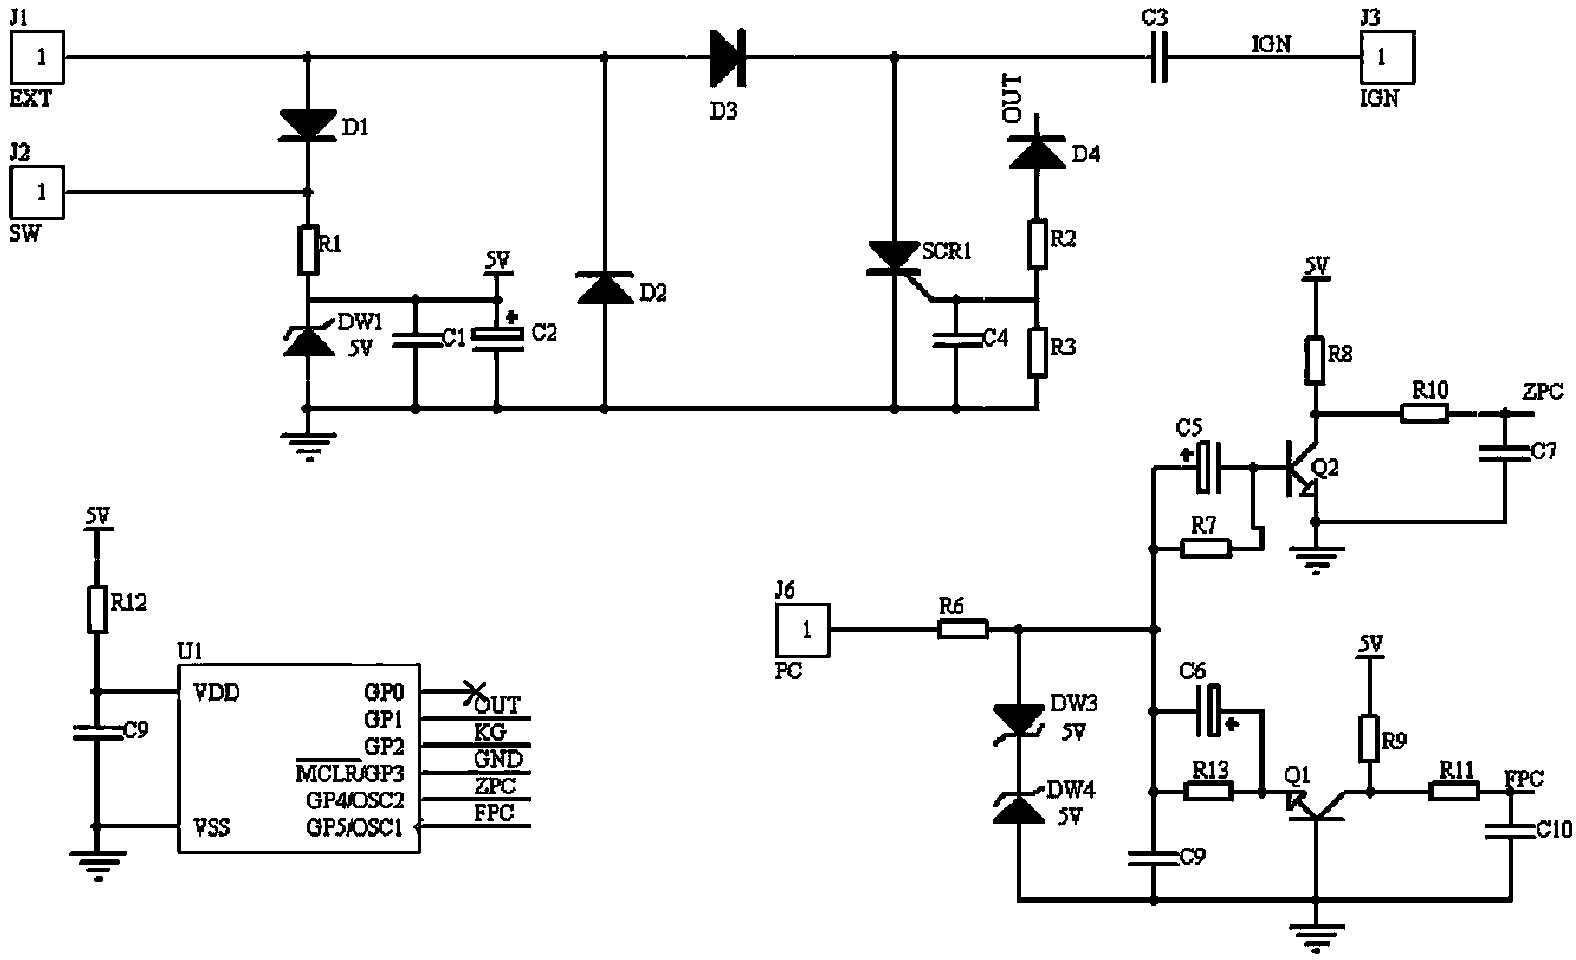 Integrated igniter control circuit